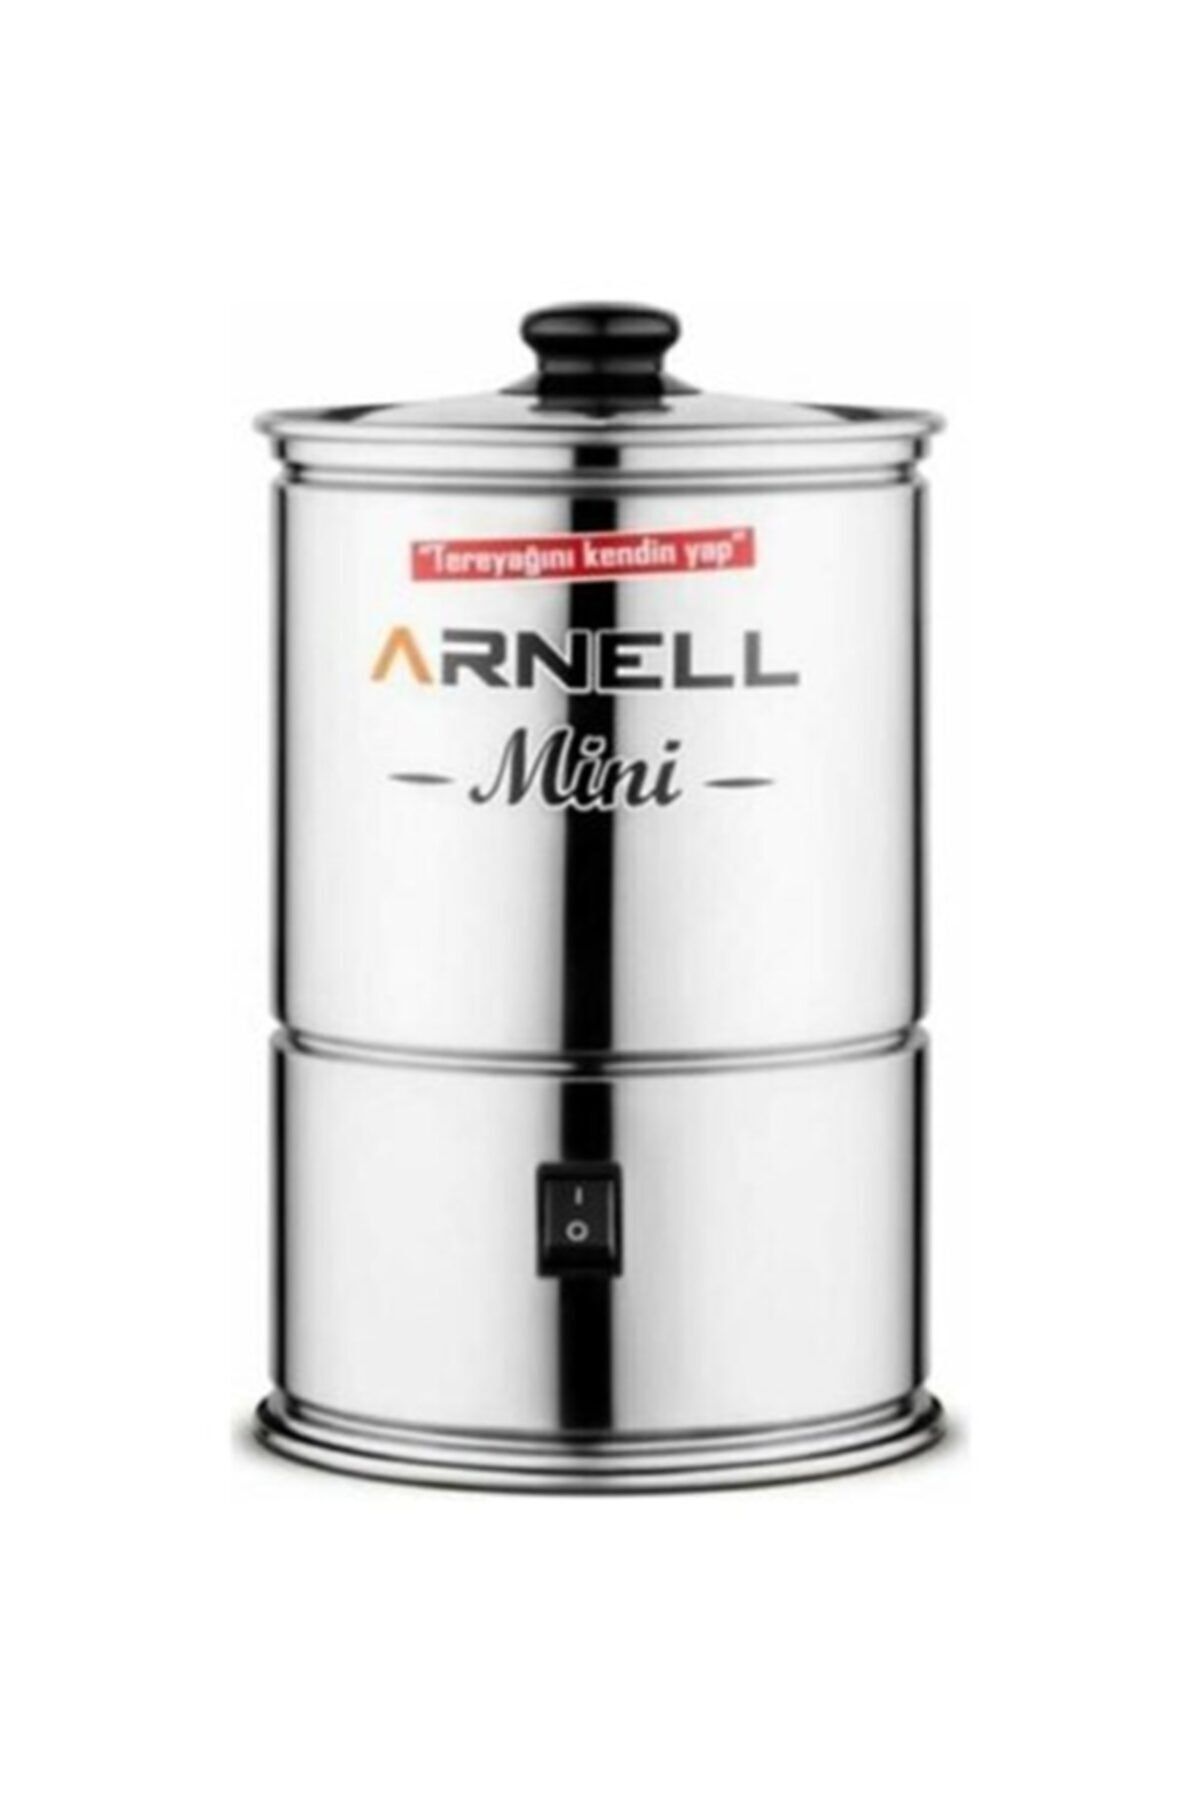 Arnell 5 Lt Mini Yayık Makinesi Ev Tipi